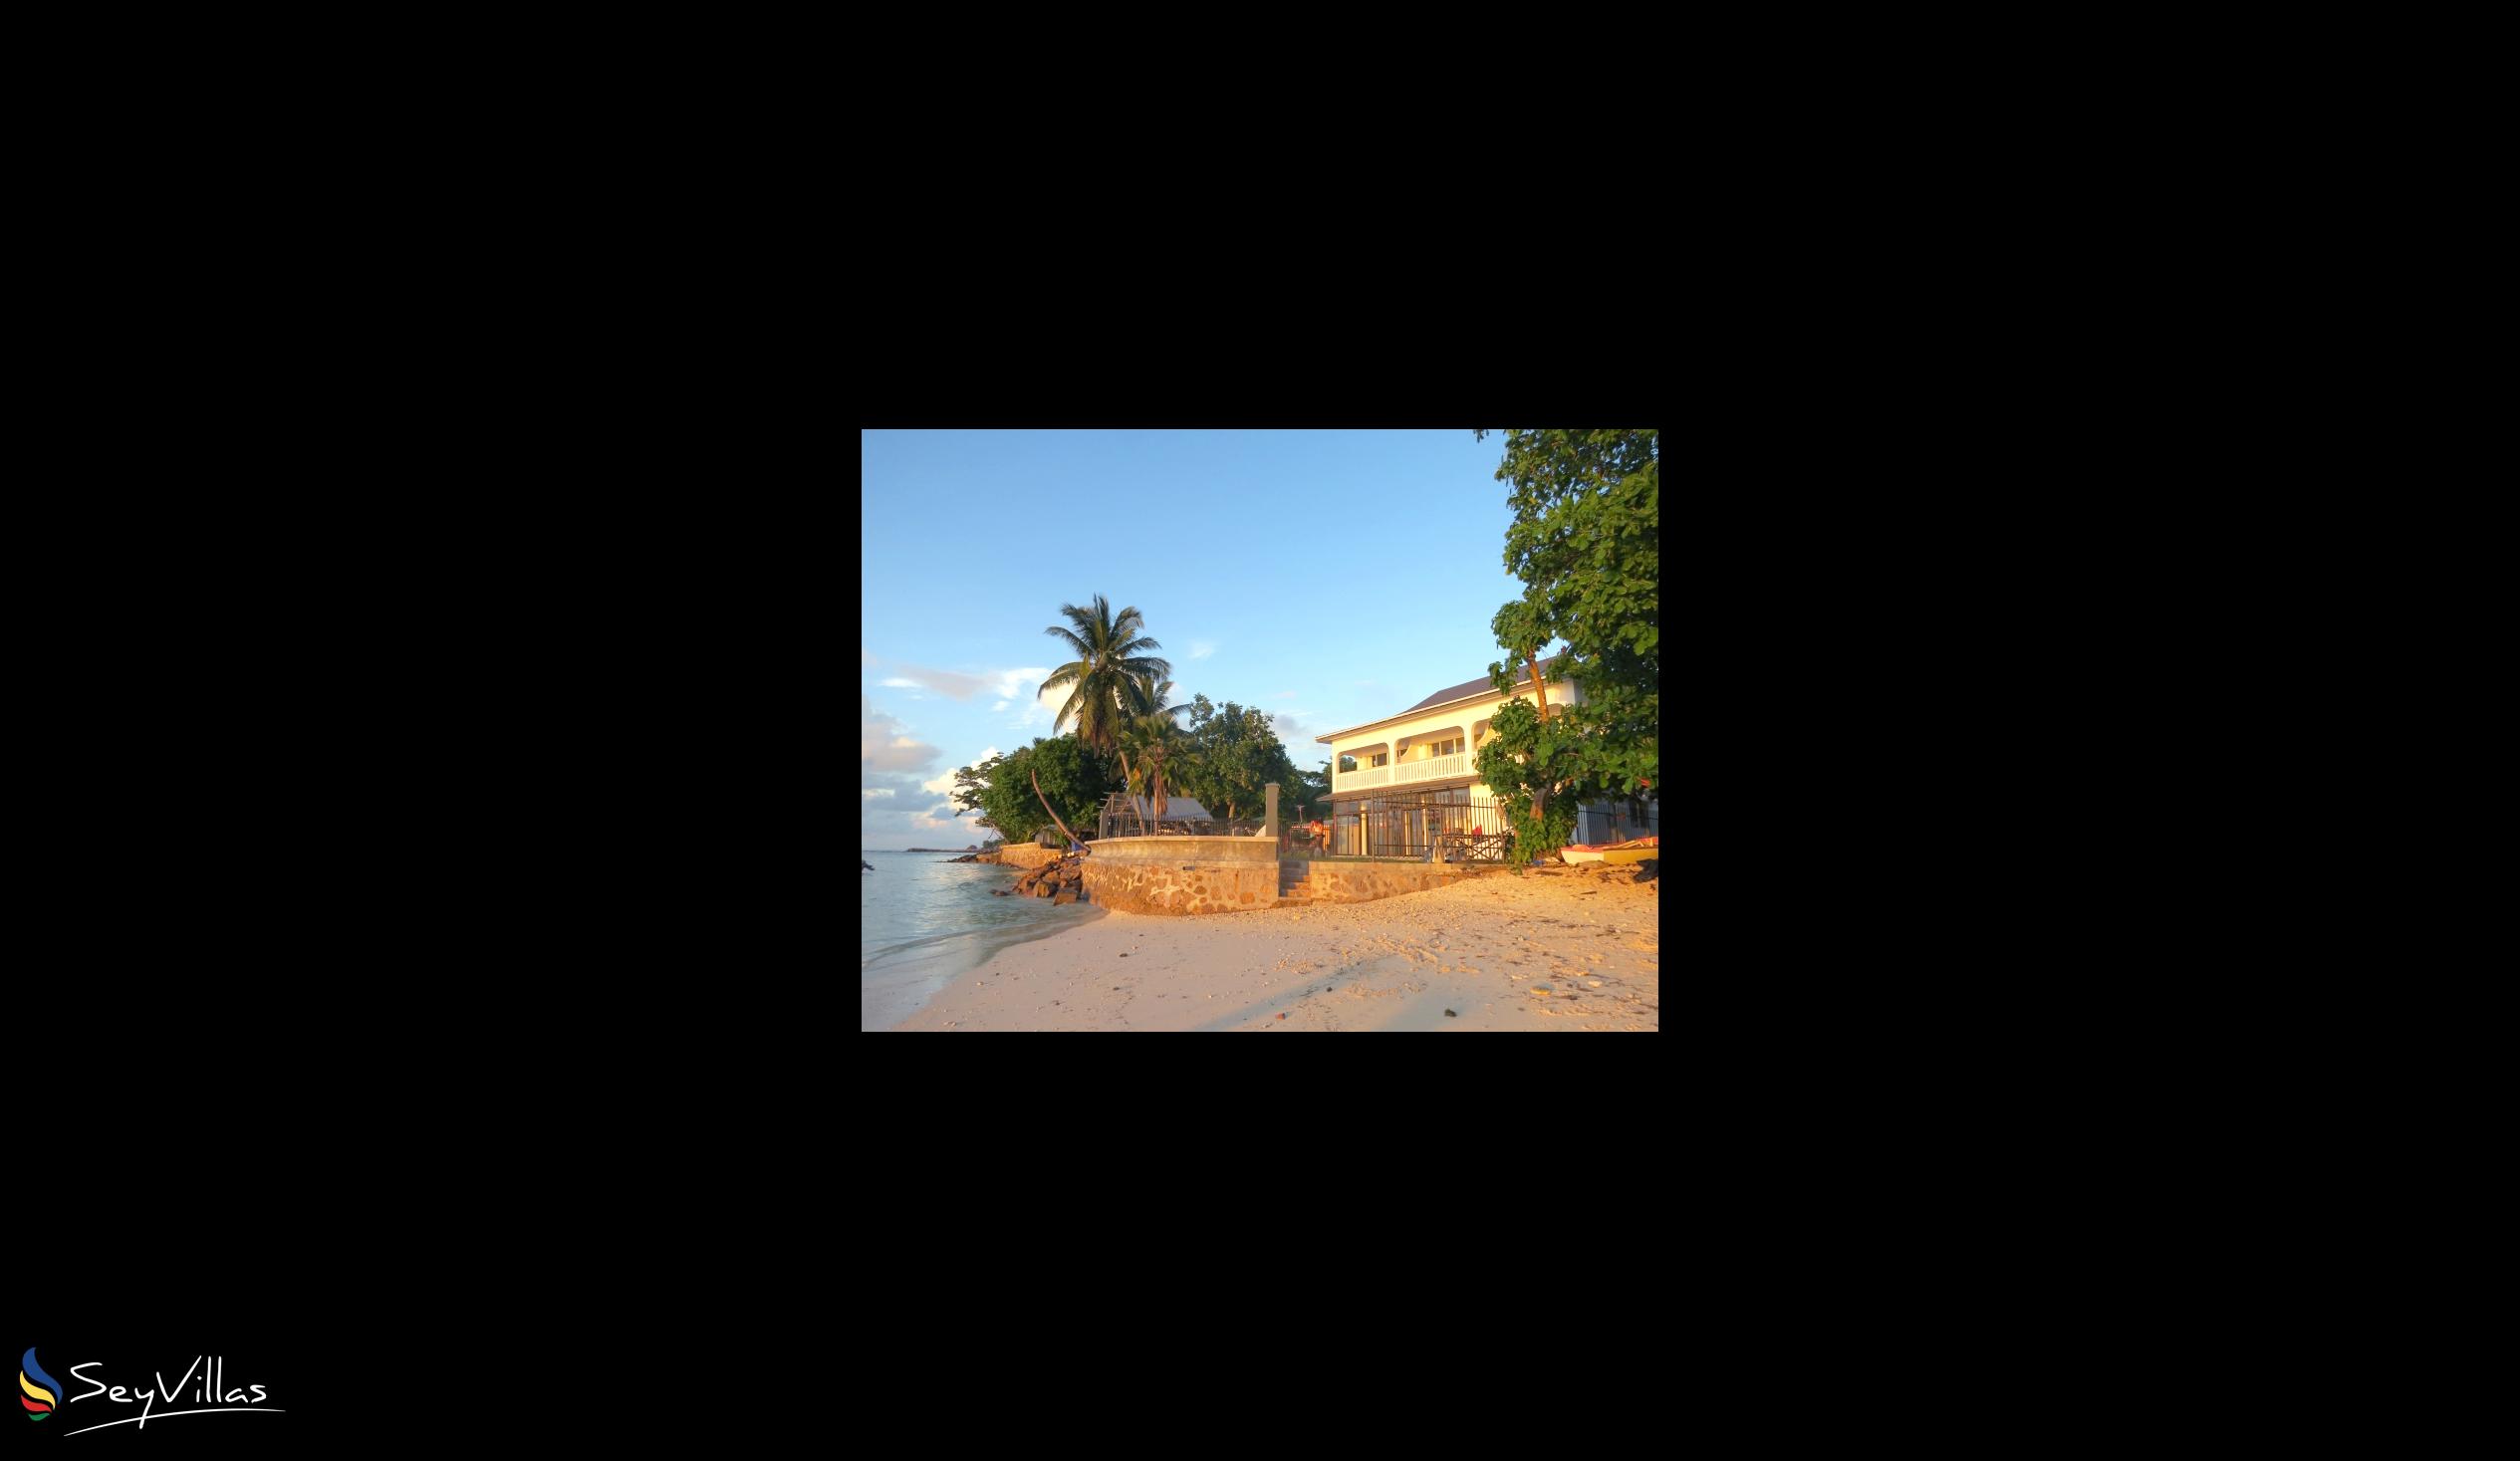 Photo 1: Marie-France Beach Front Apartments - Outdoor area - La Digue (Seychelles)